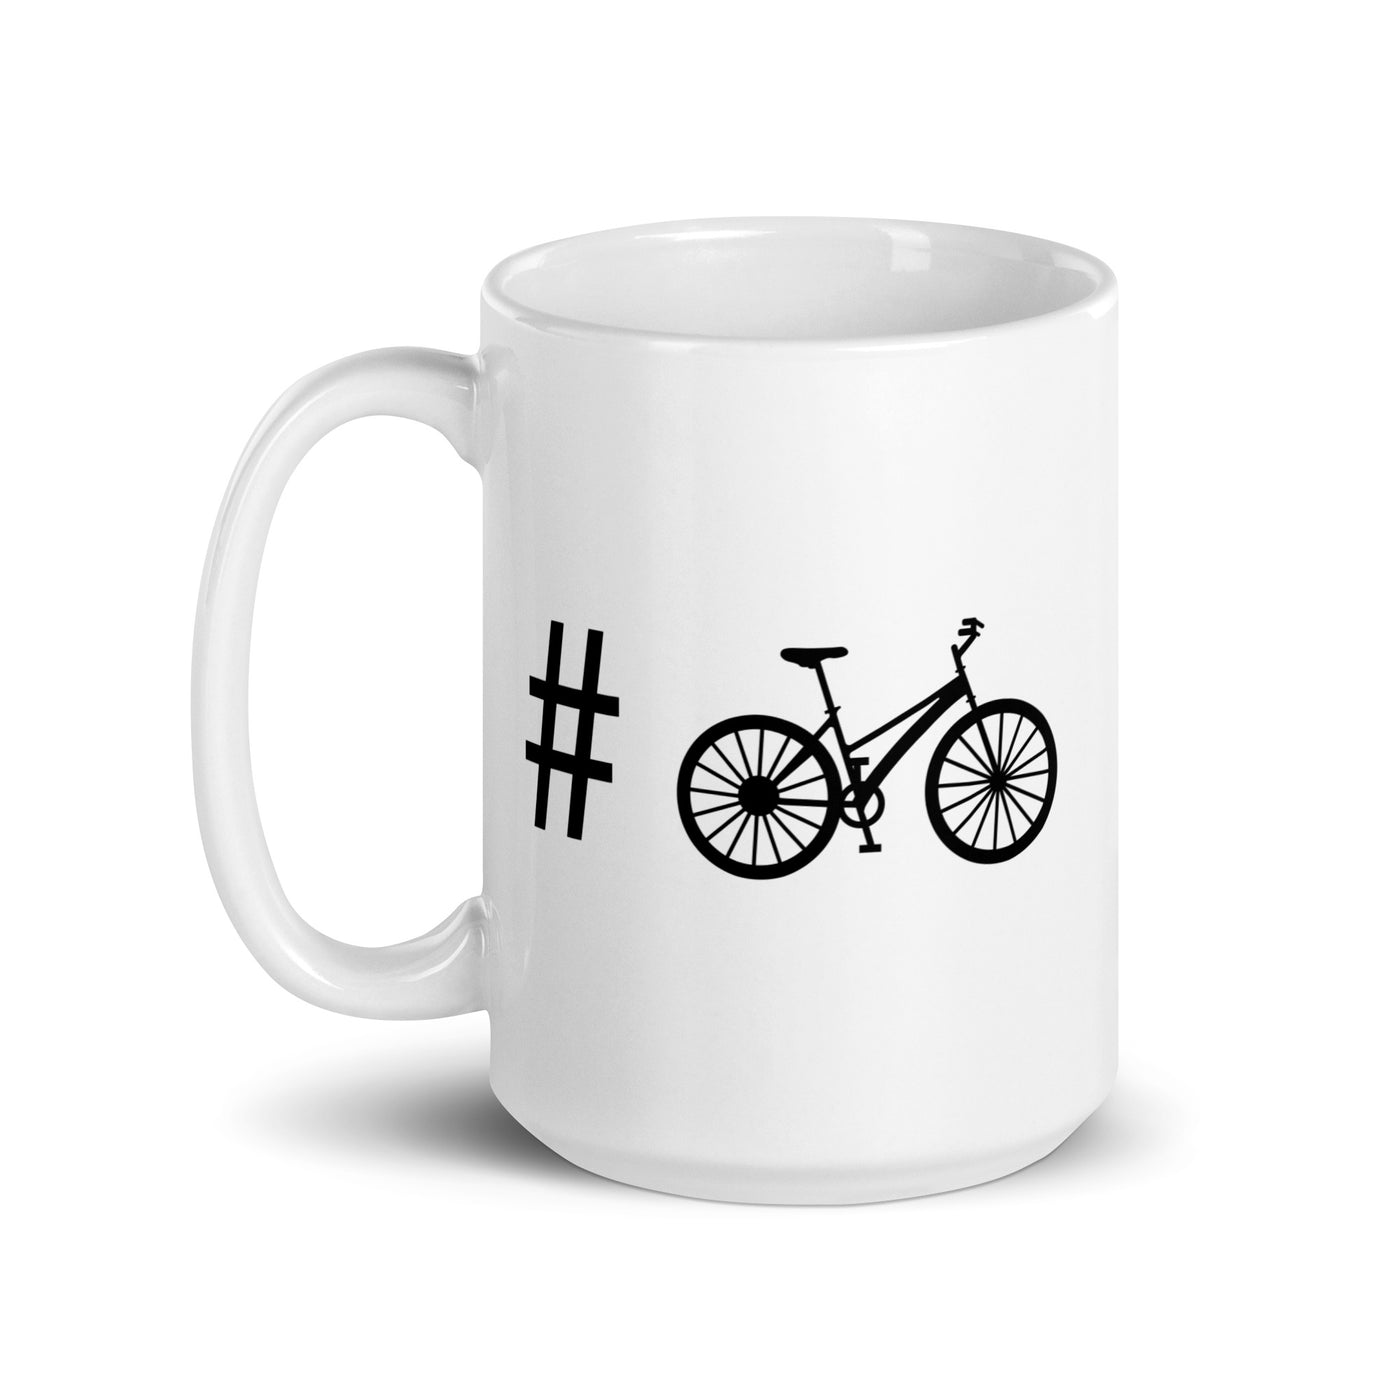 Hashtag - Cycling - Tasse fahrrad